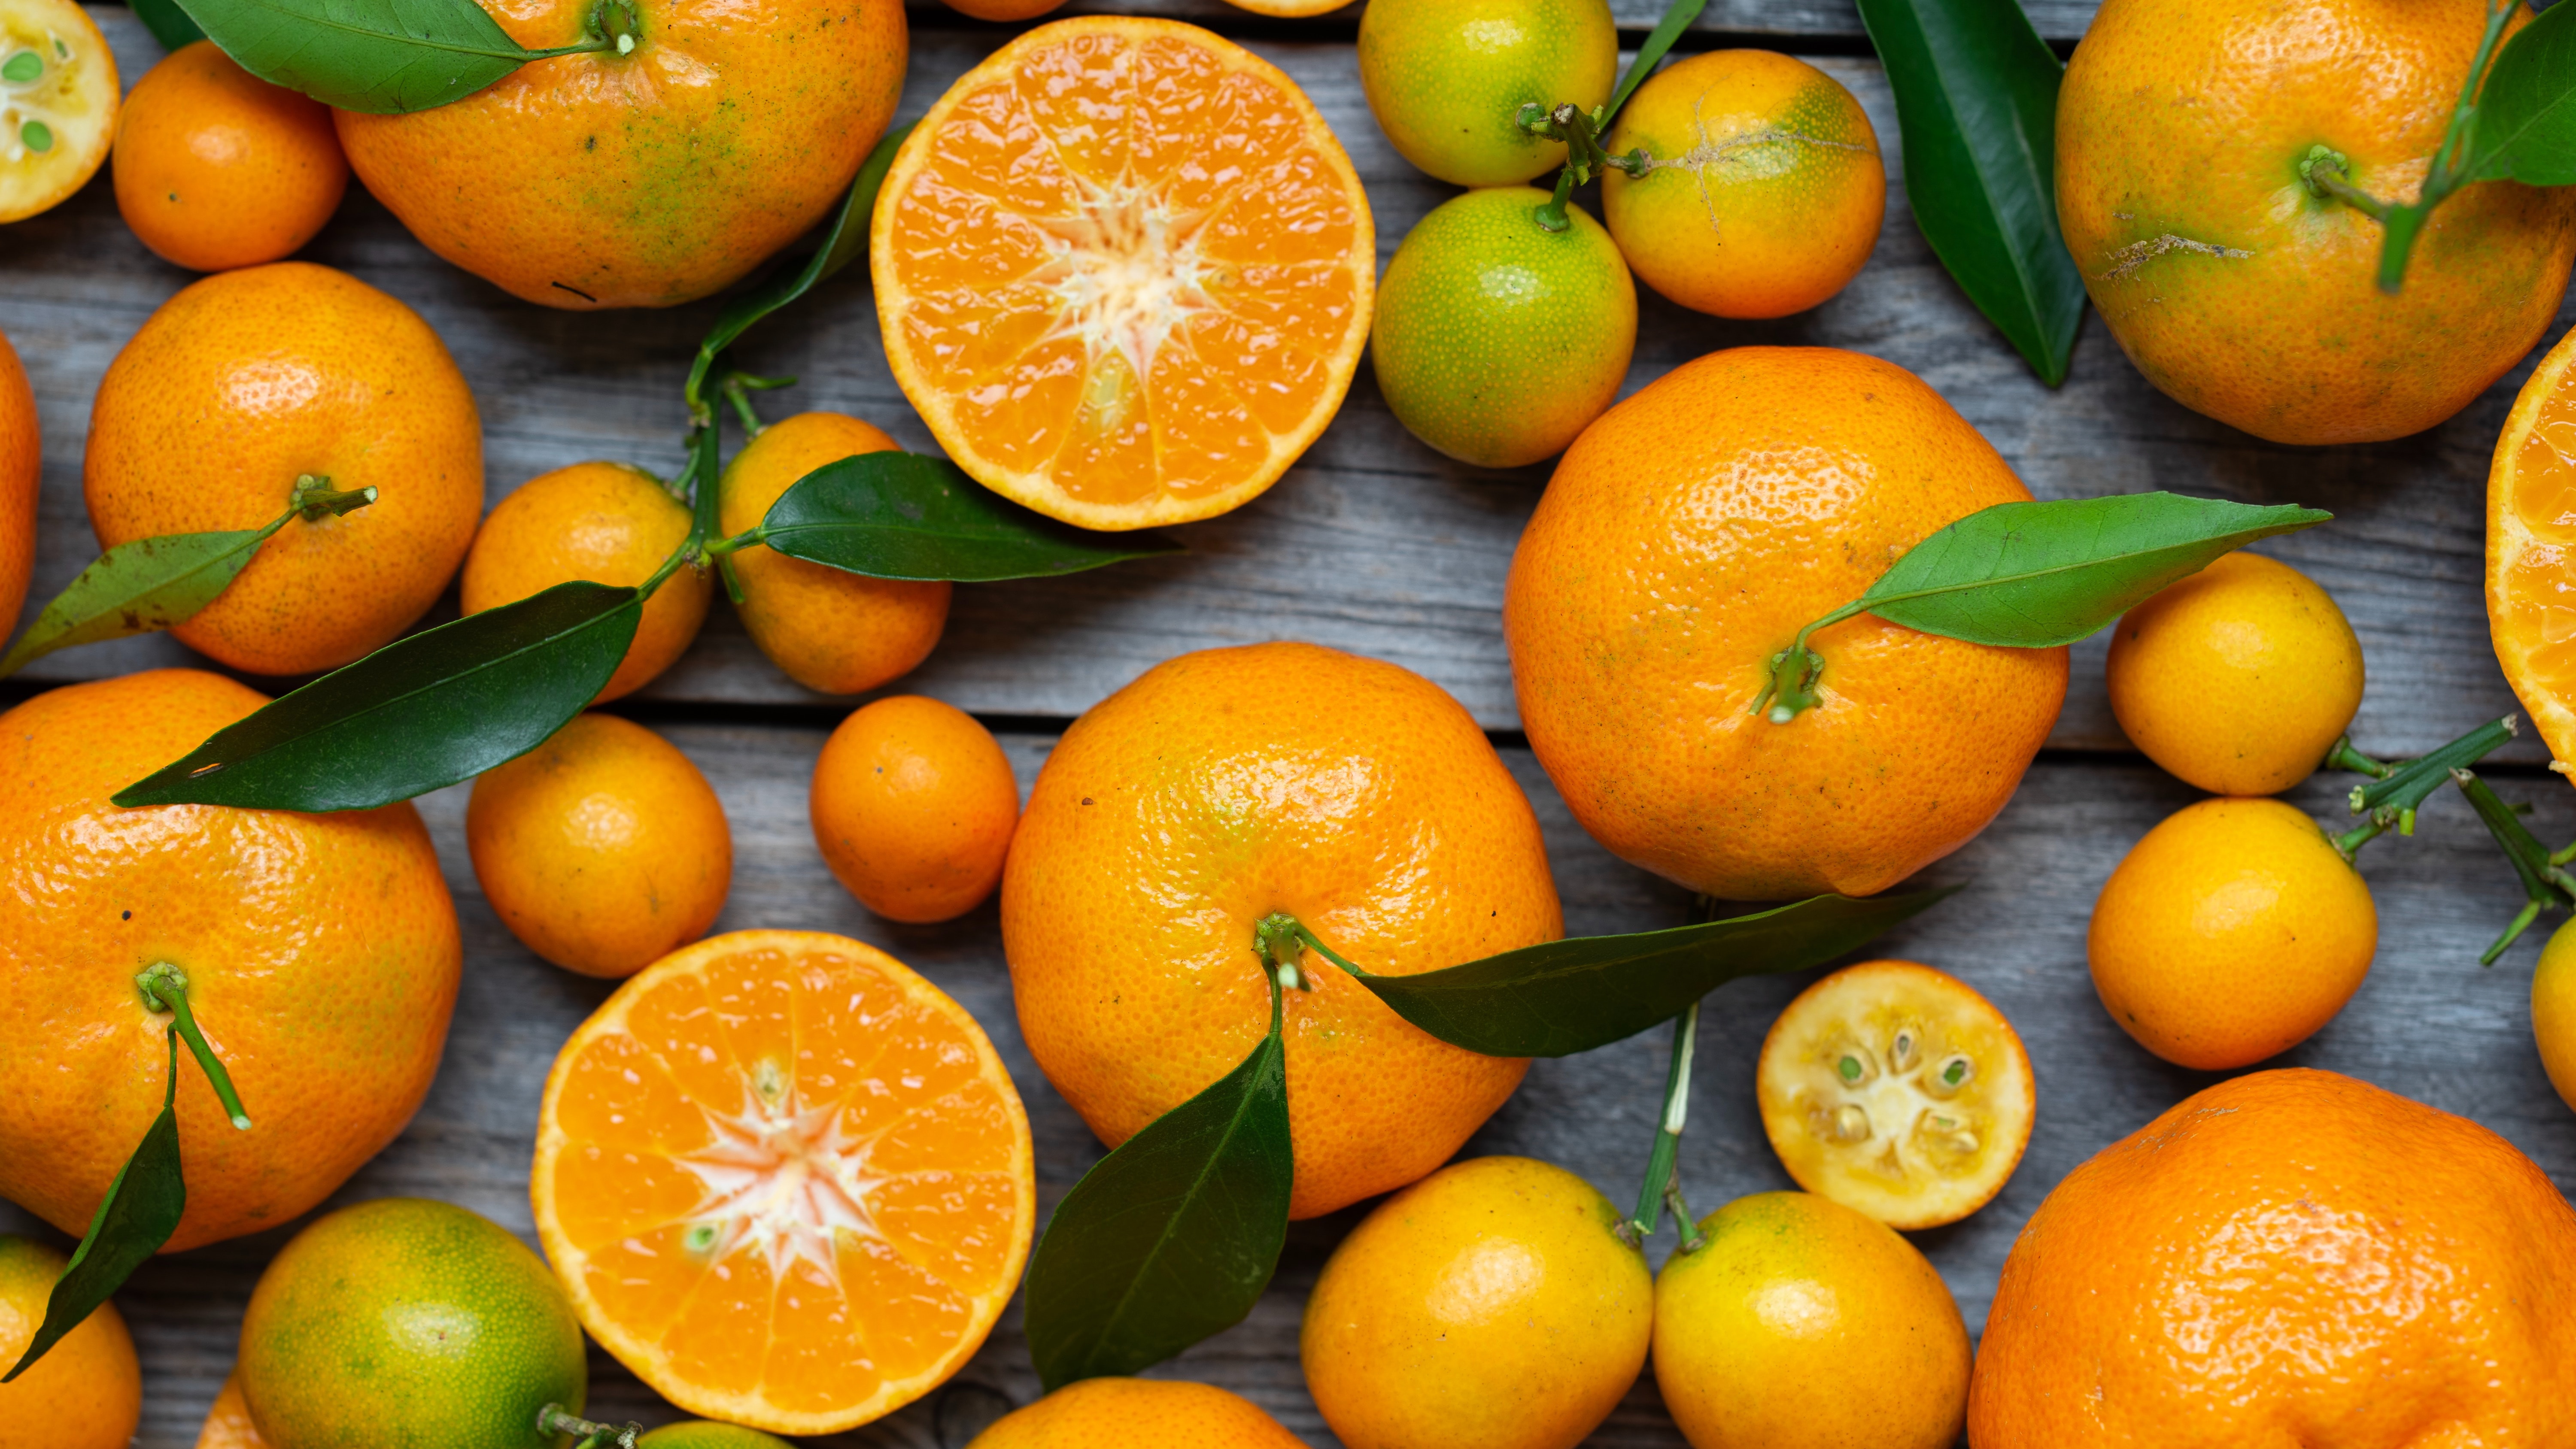 Мандарин х. Танжерин цитрус. Мандарин померанец. Цитрус мандарин +апельсин. Мандарин мева.